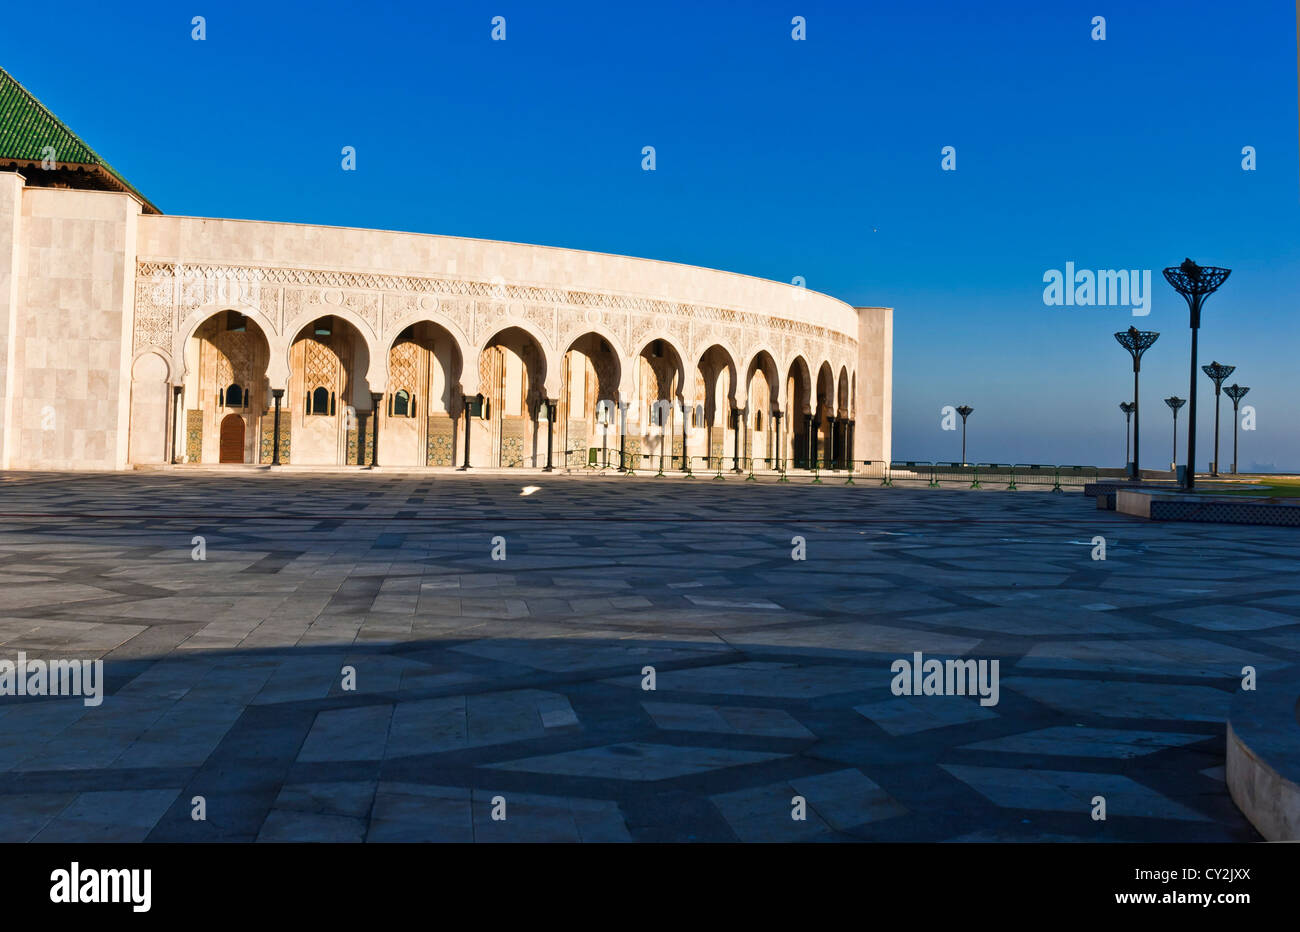 King Hassan II Mosque, Casablanca, Morocco Stock Photo